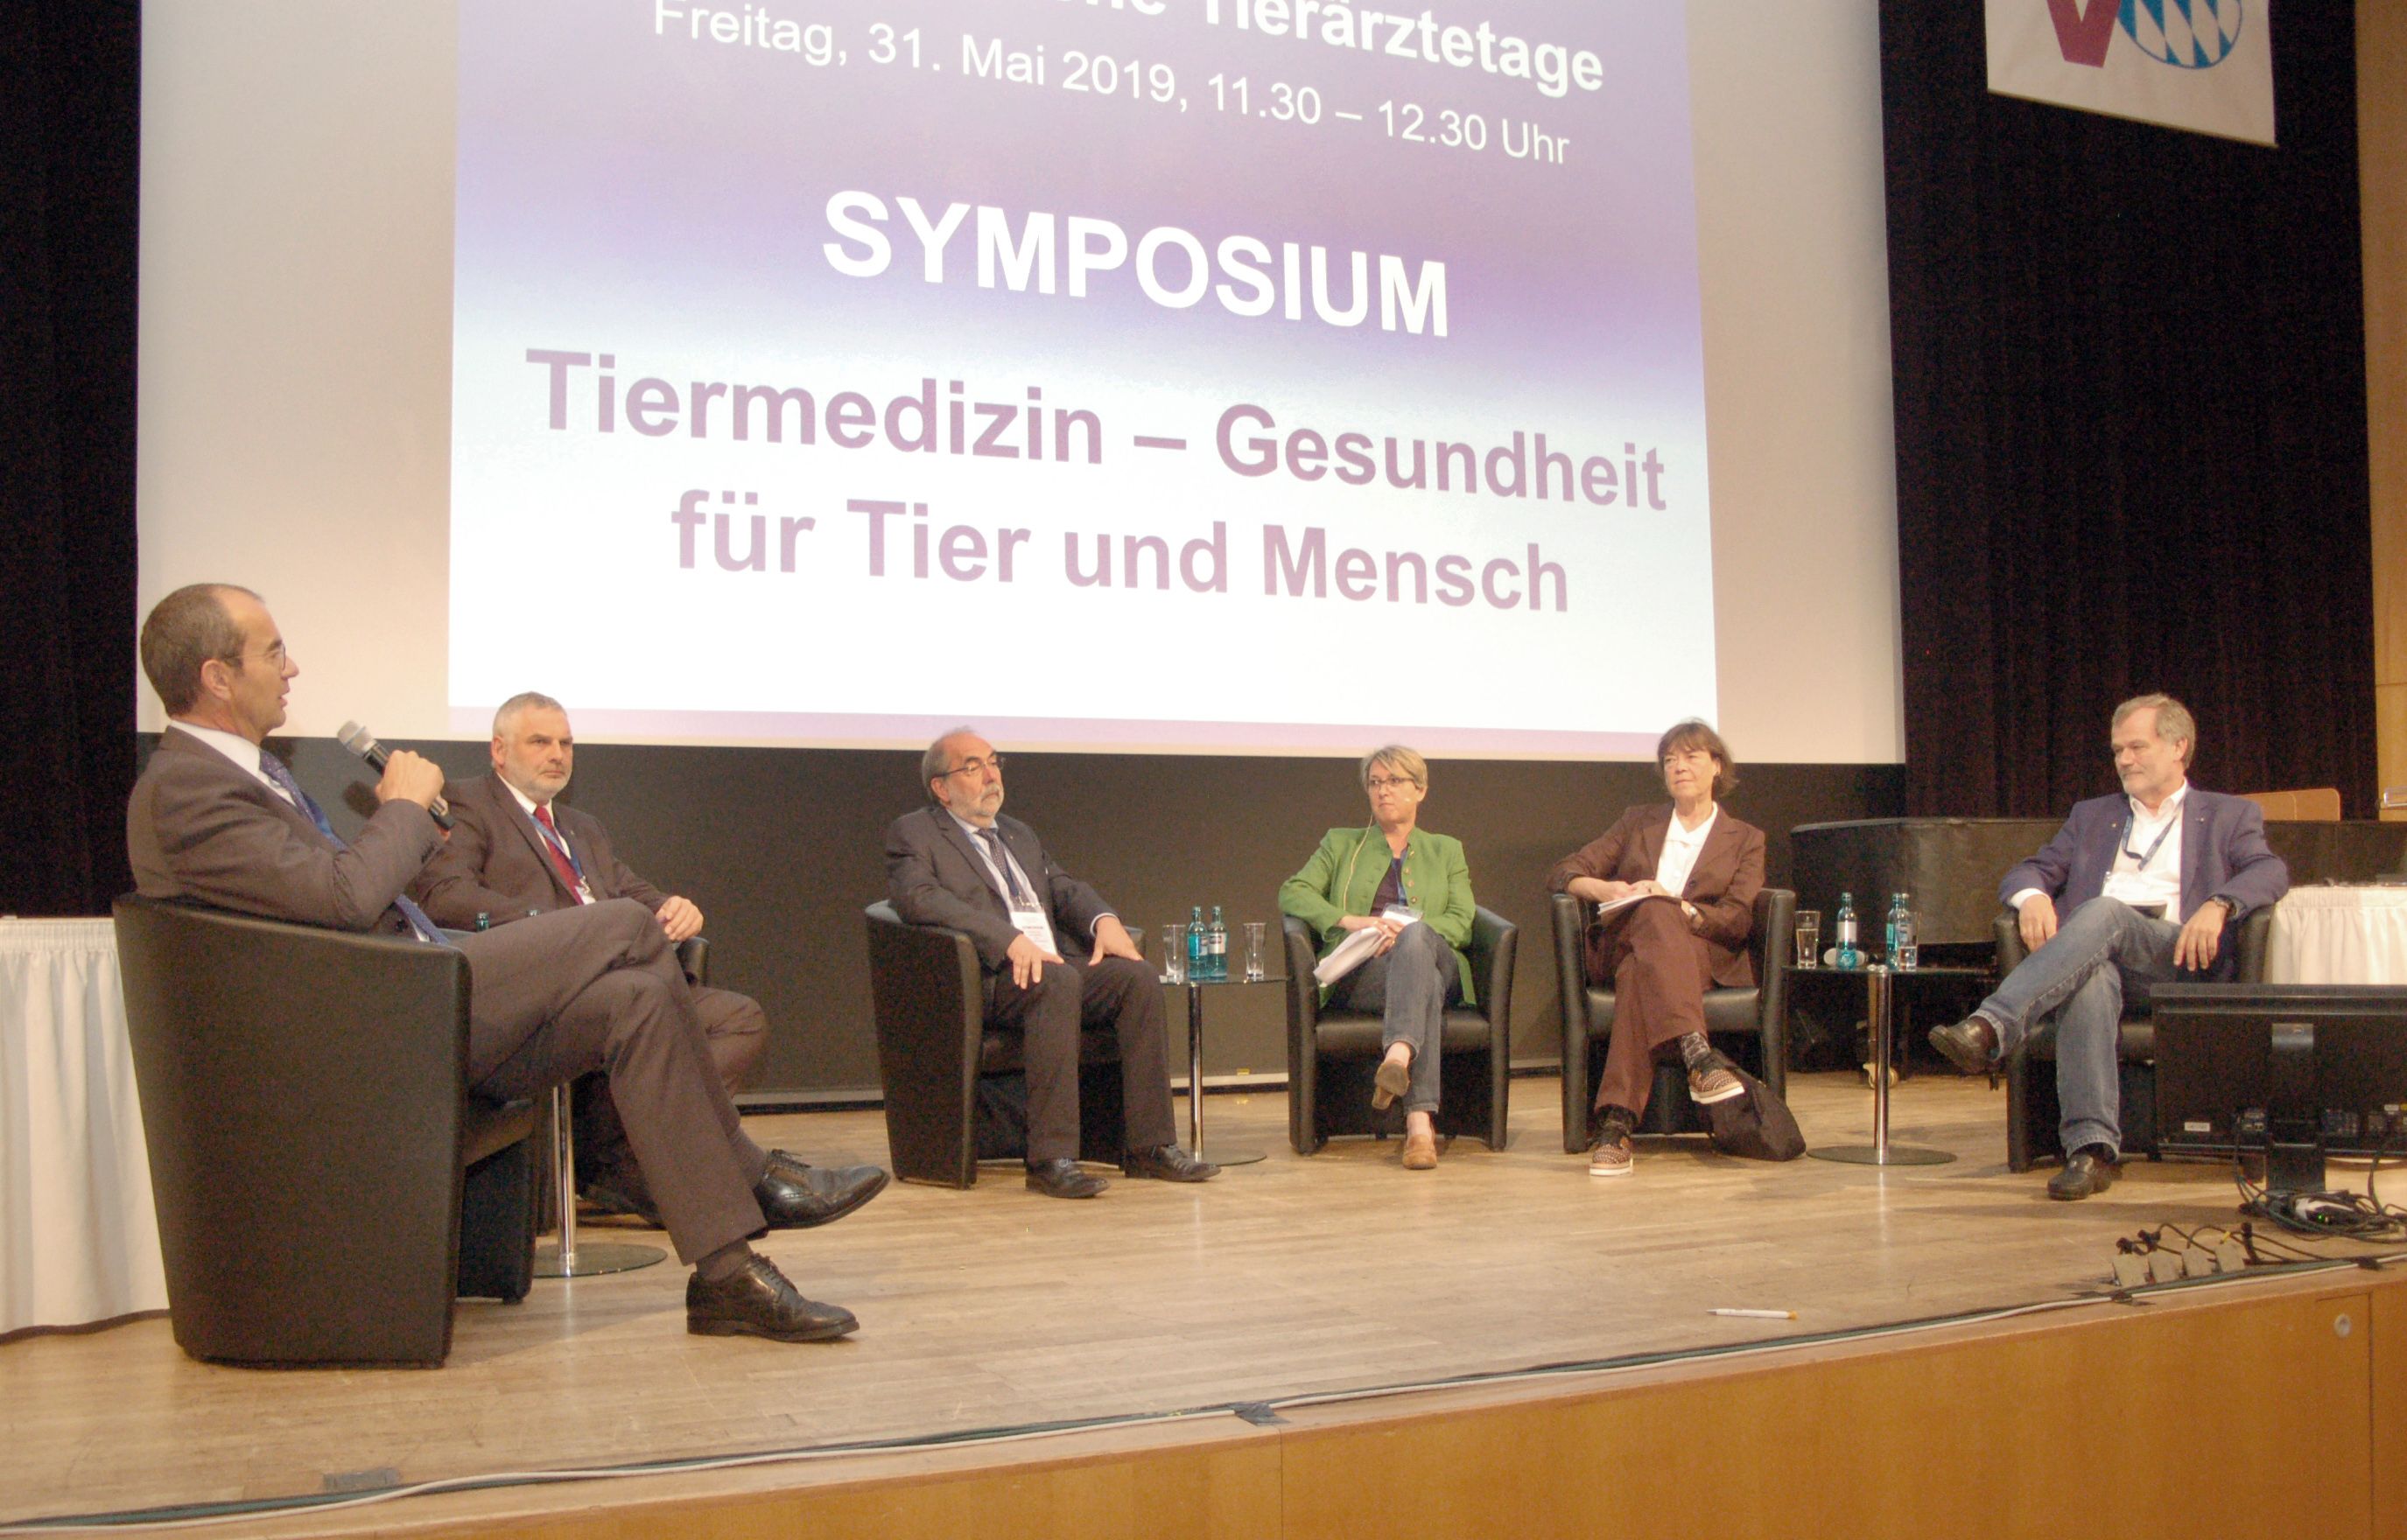 Symposium Tiermedizin auf dem BLTK 2019 in Nürnberg